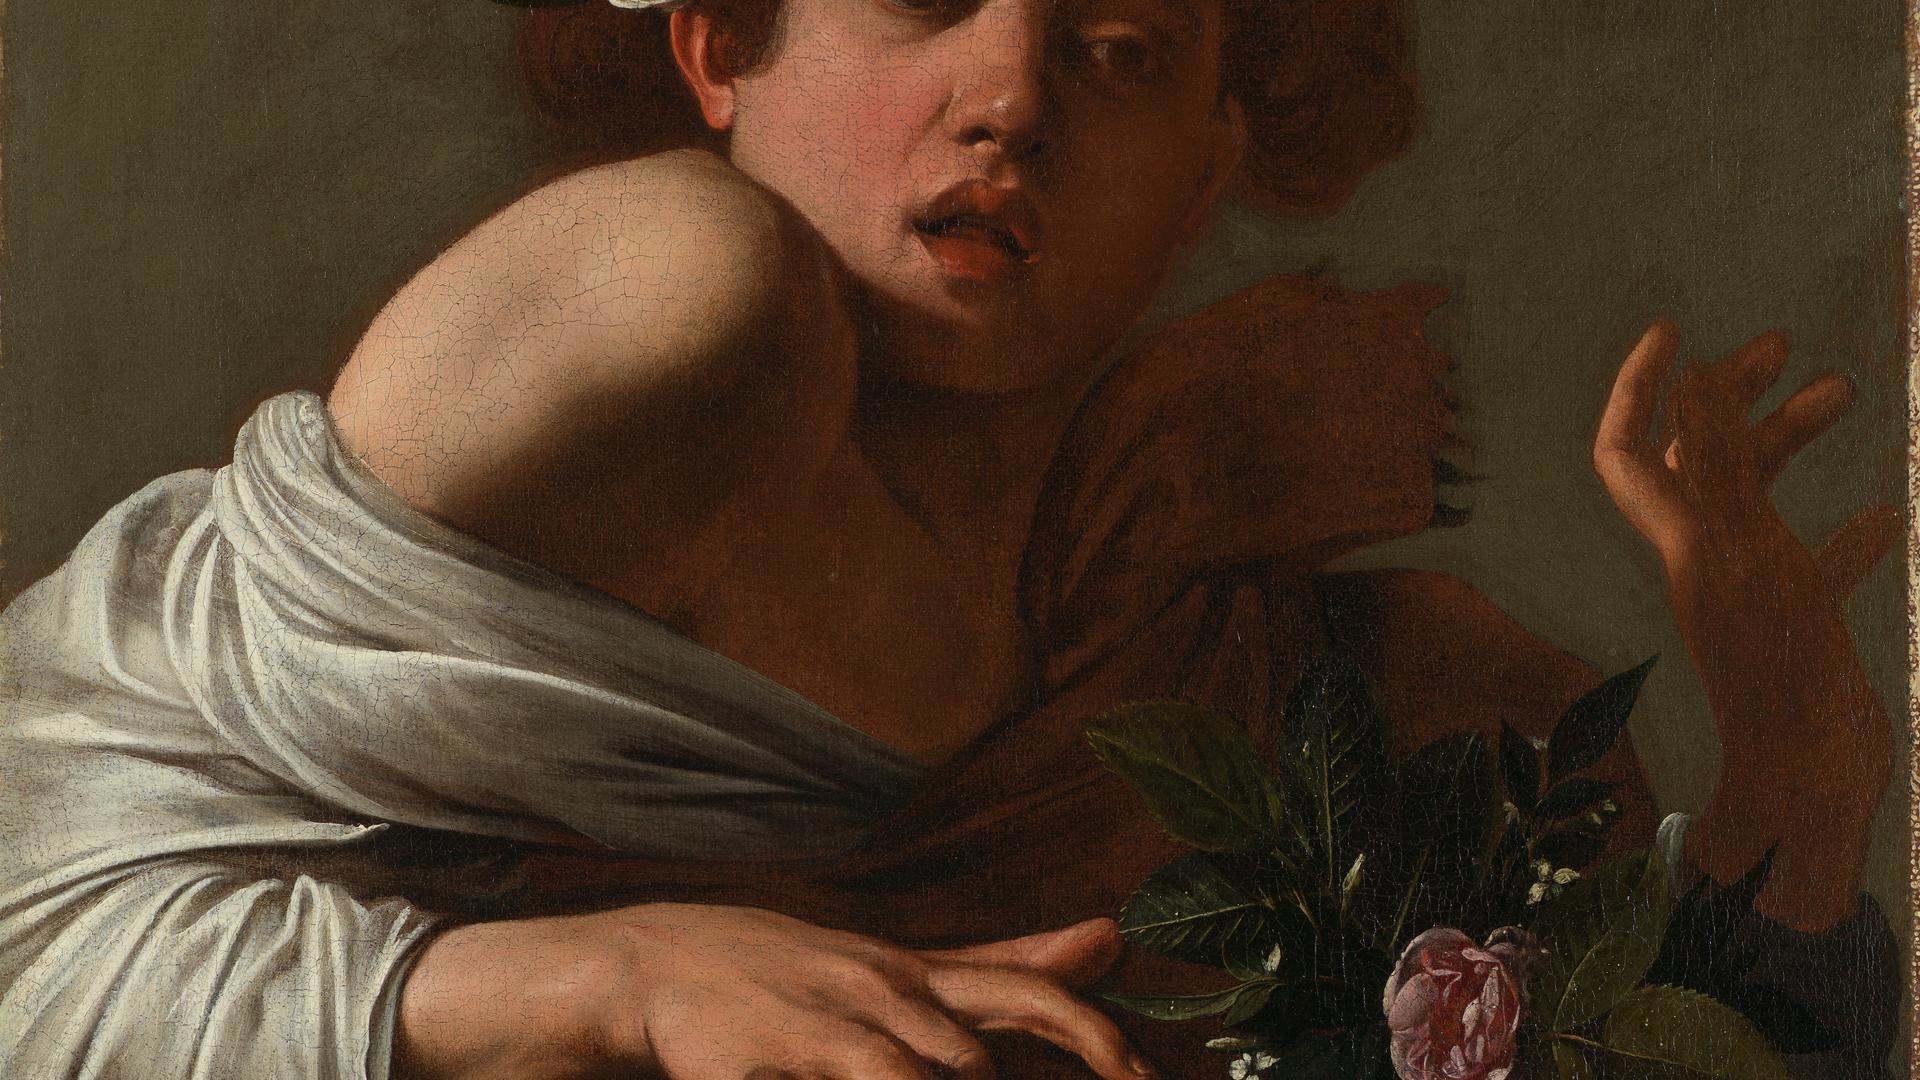 Boy bitten by a Lizard by Michelangelo Merisi da Caravaggio